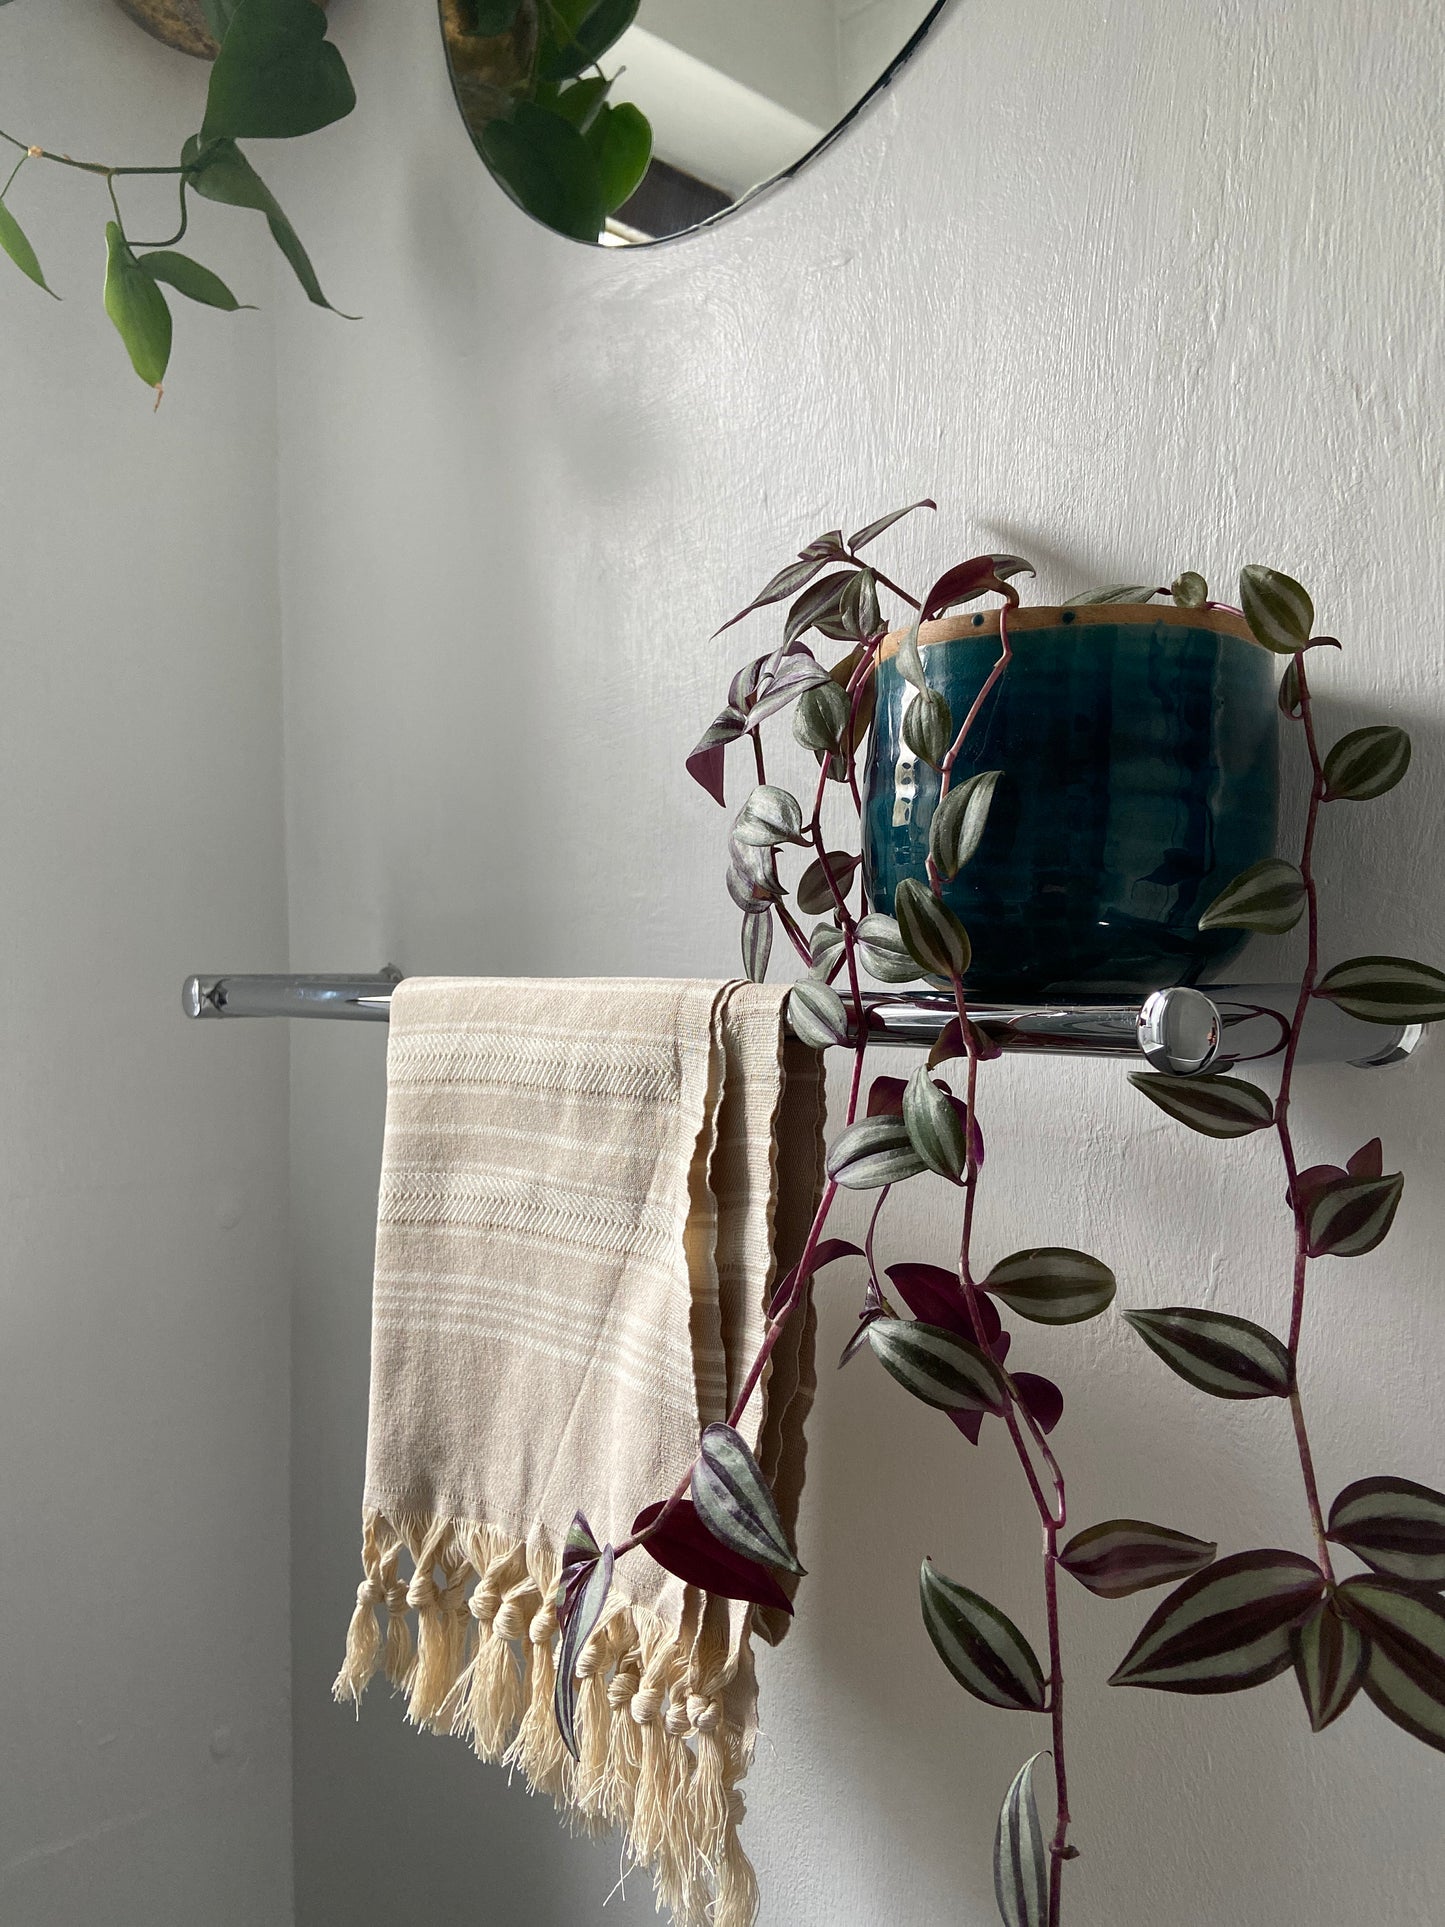 Striped Design Tea Towel - Cream Kitchen Towel - Bathroom Hand Towel - Cotton Towel